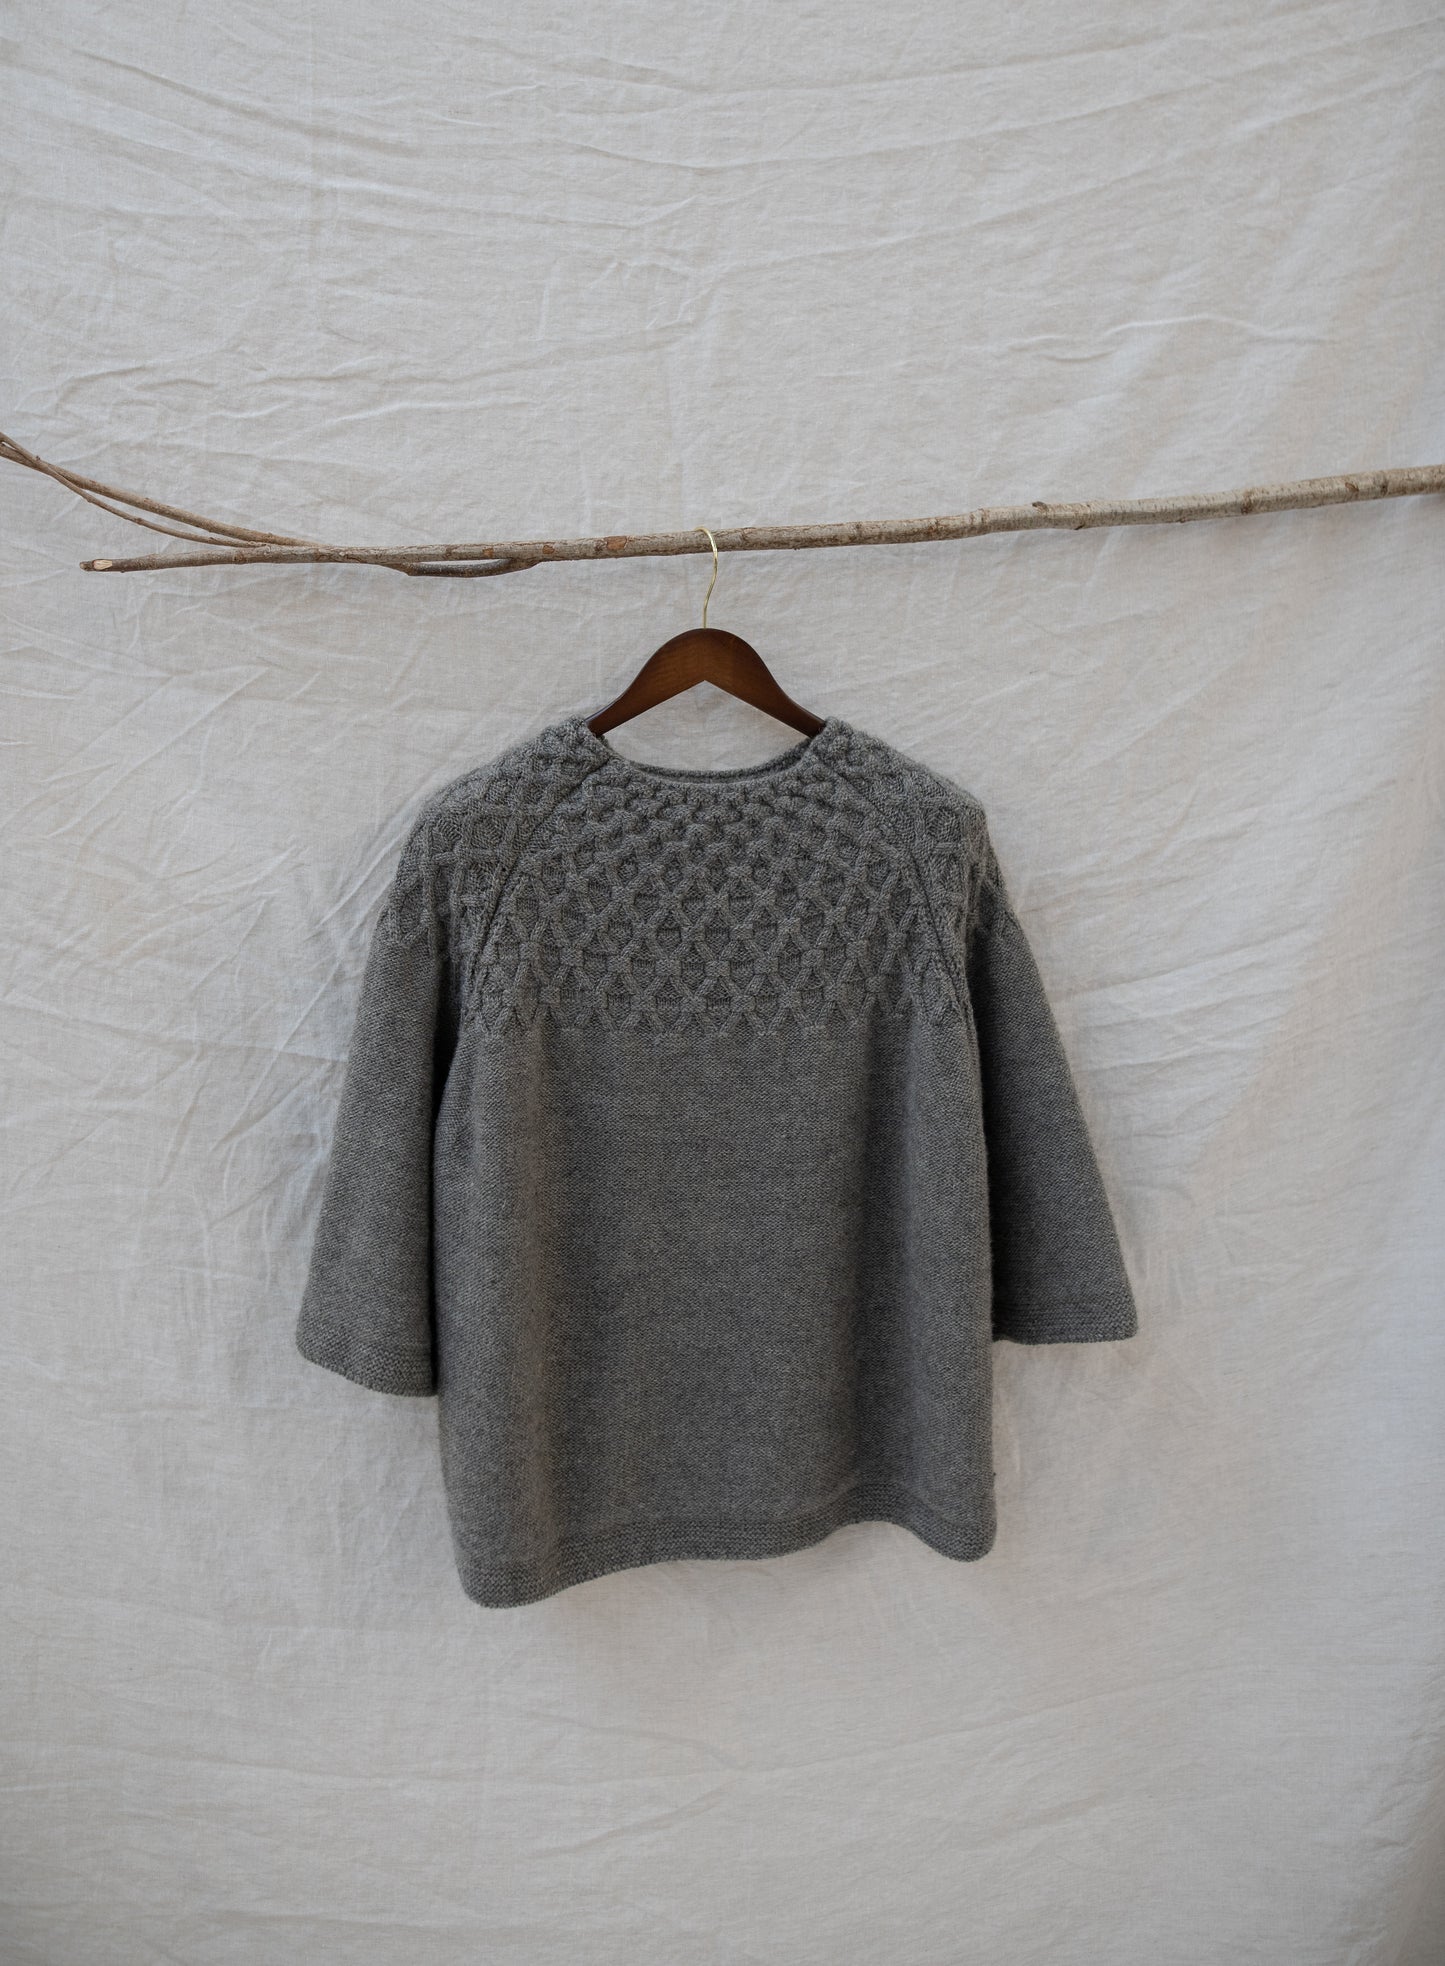 The Elba British Wool Sweater in Un-dyed Steel Grey